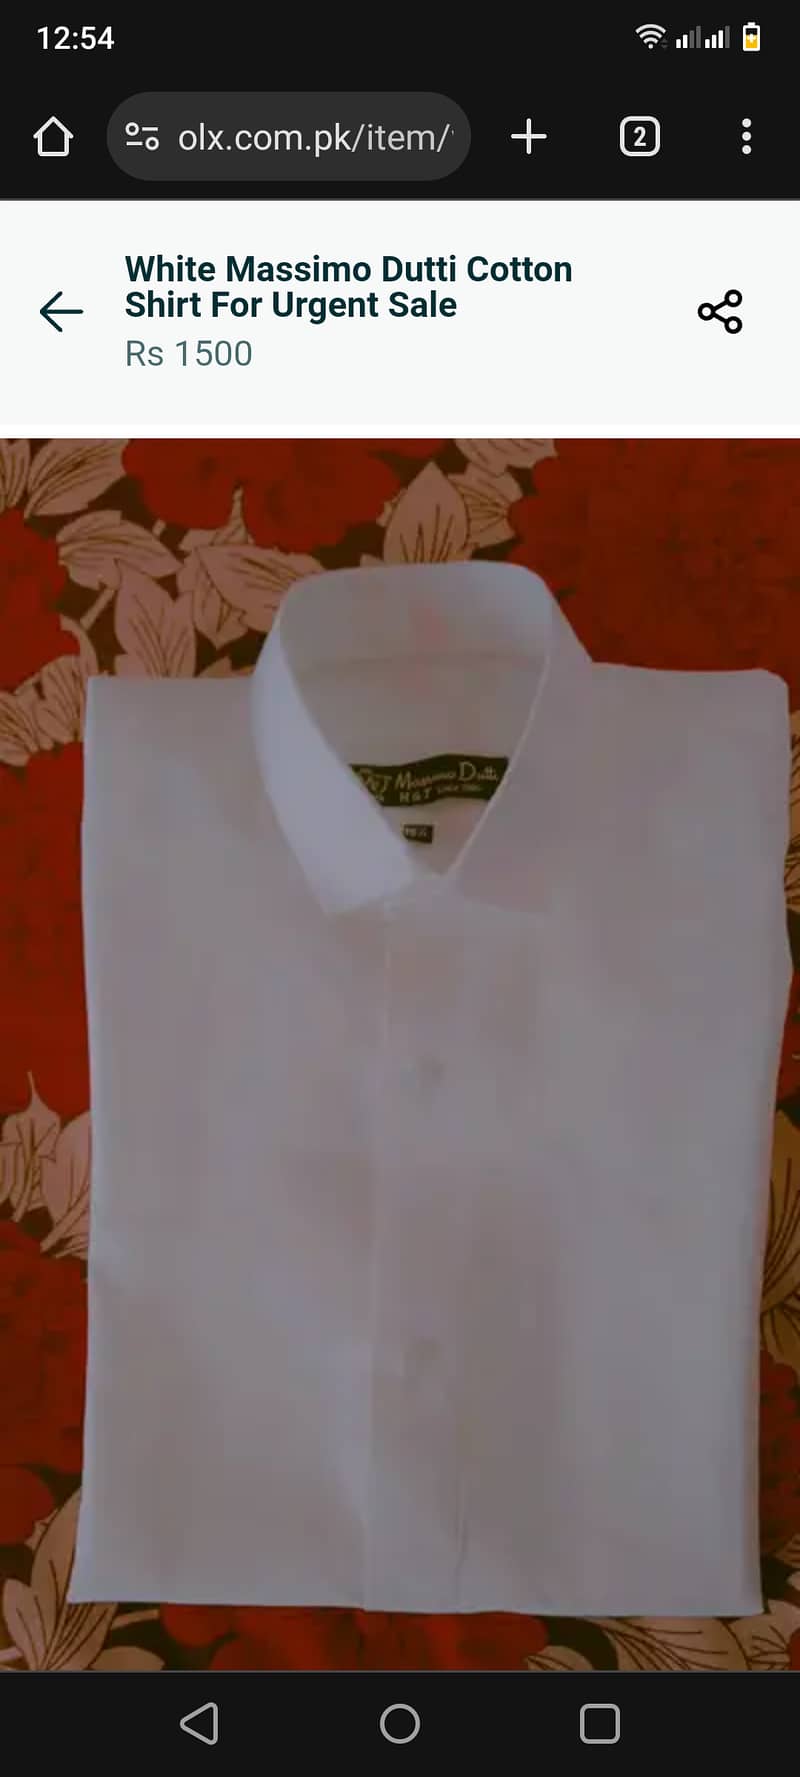 Massimo dutti cotton shirt for urgent sale 1